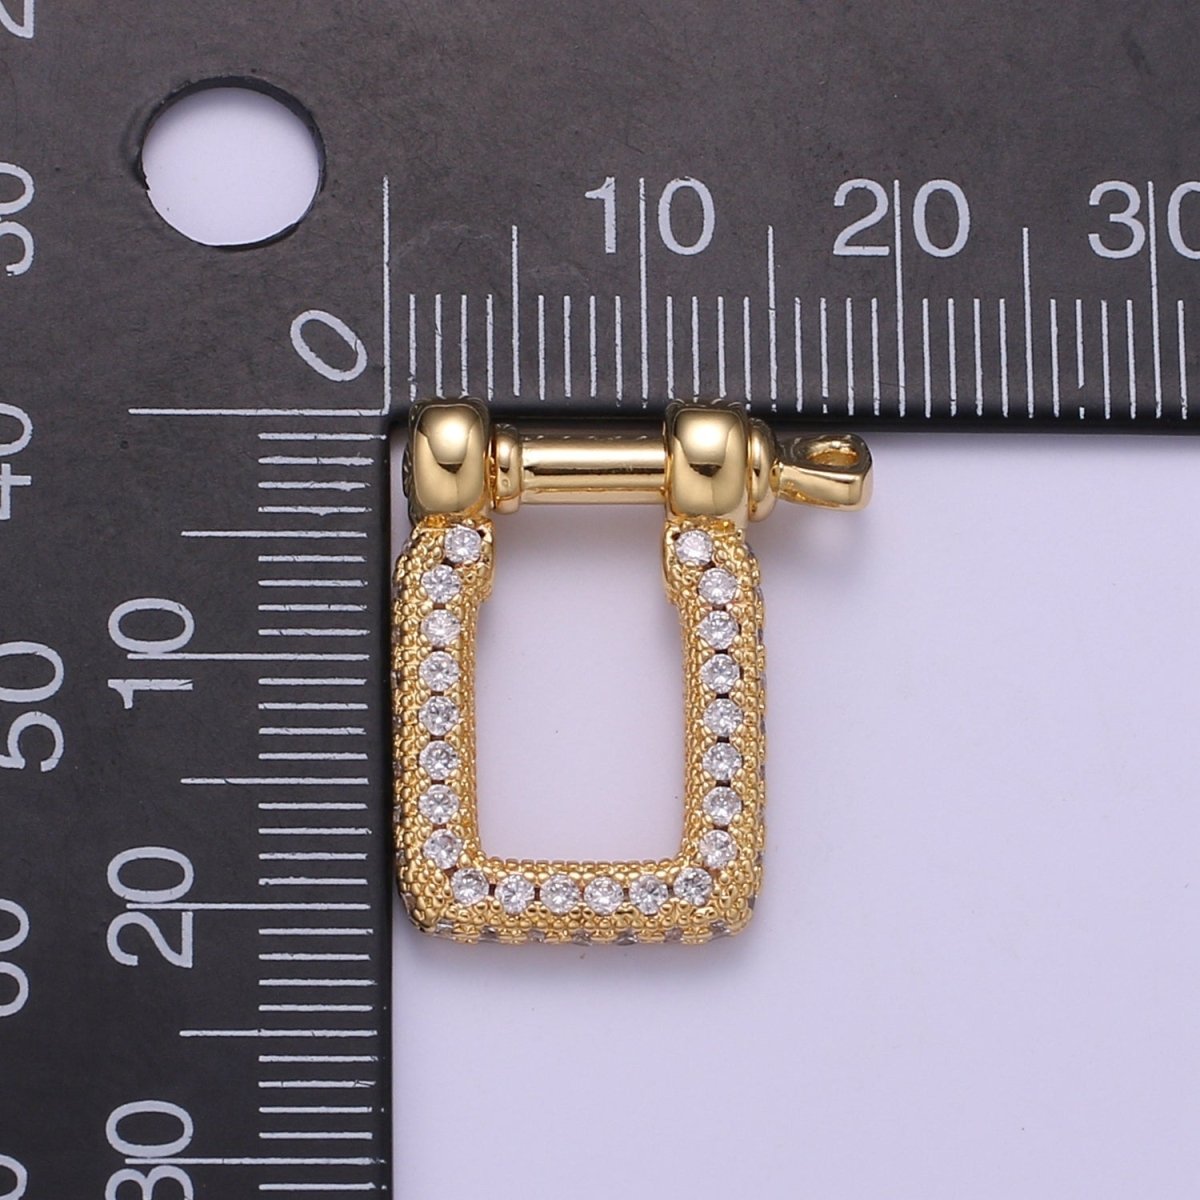 Micor pave Clasp Gold Filled Screw clasp lock, Anchor Shackle, Gold Rectangle Cz Bracelet Necklace Clasp Sailor Bracelet Clasp Supply L-259 - DLUXCA